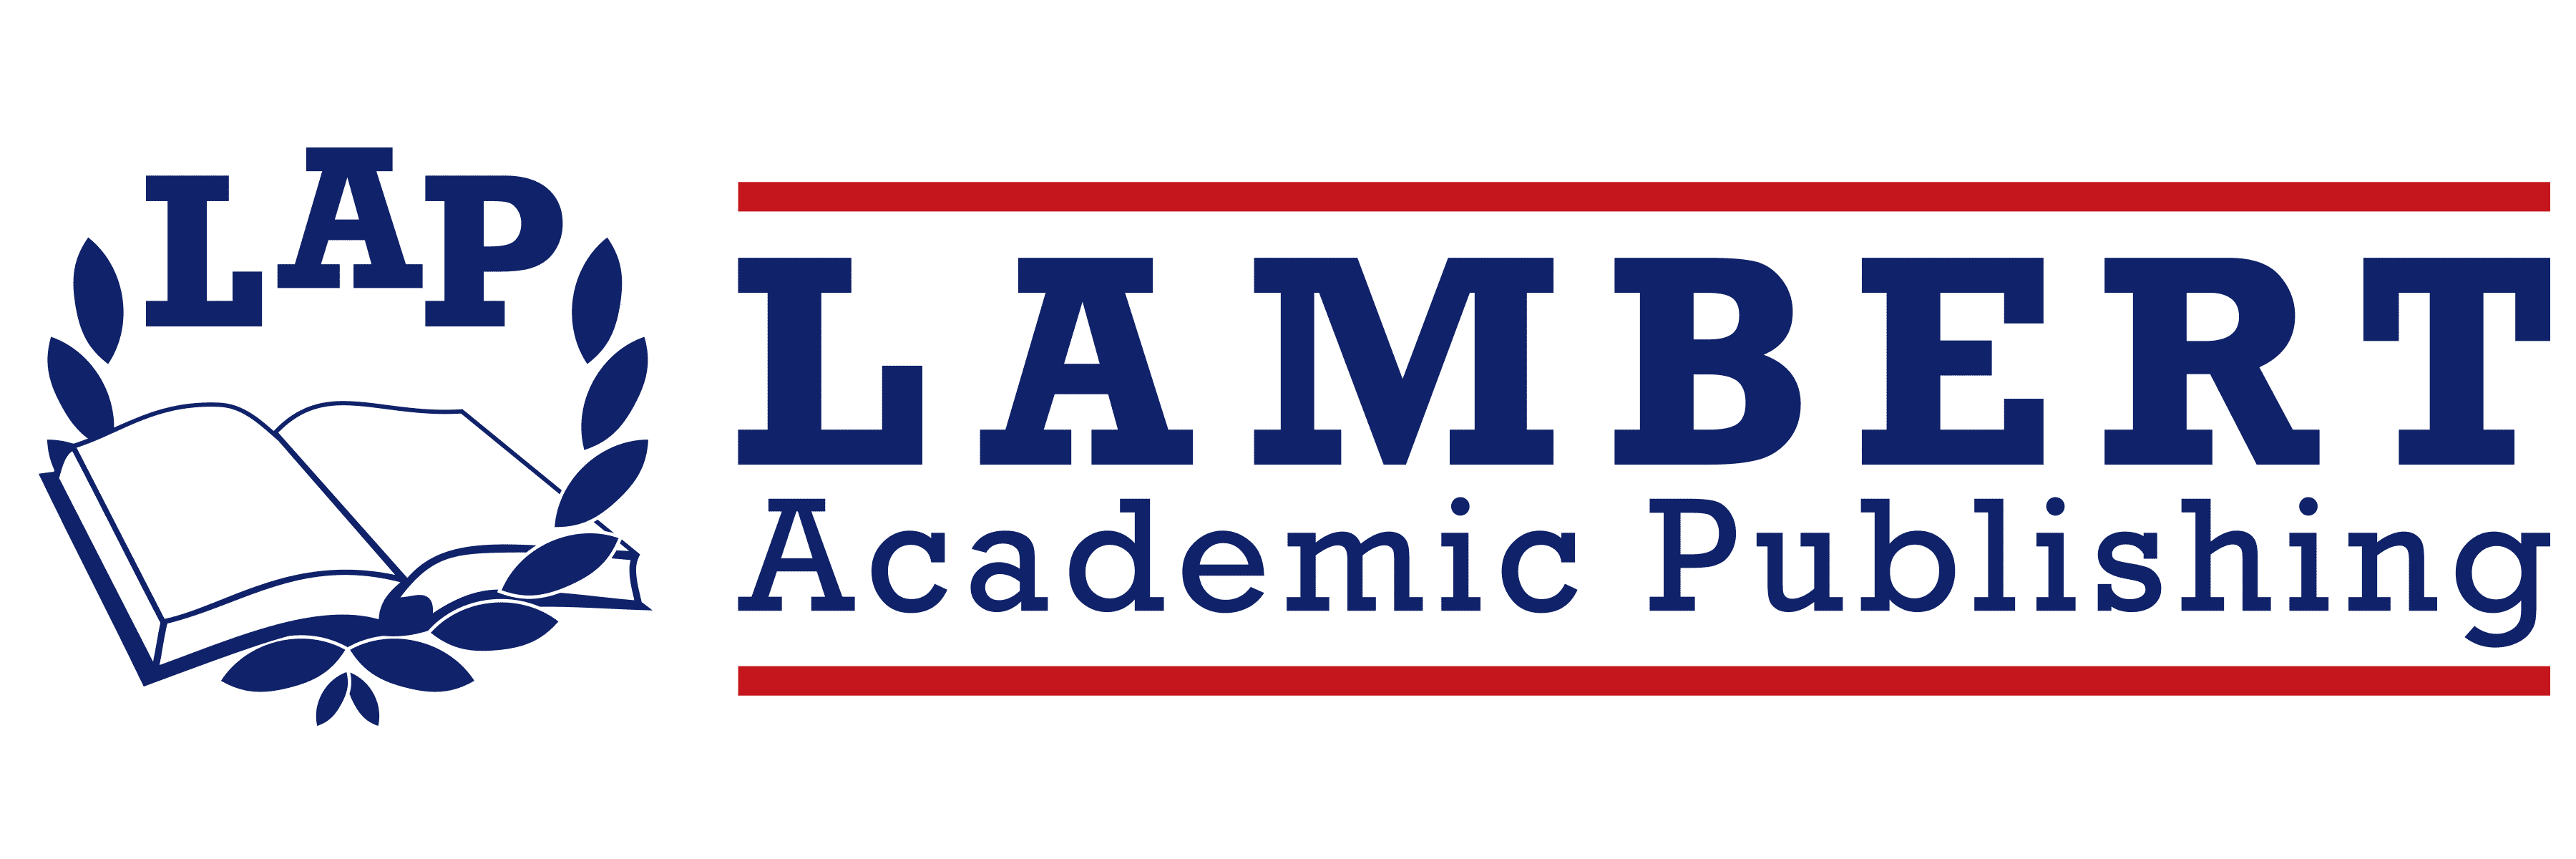 Lambert Academic Publishing